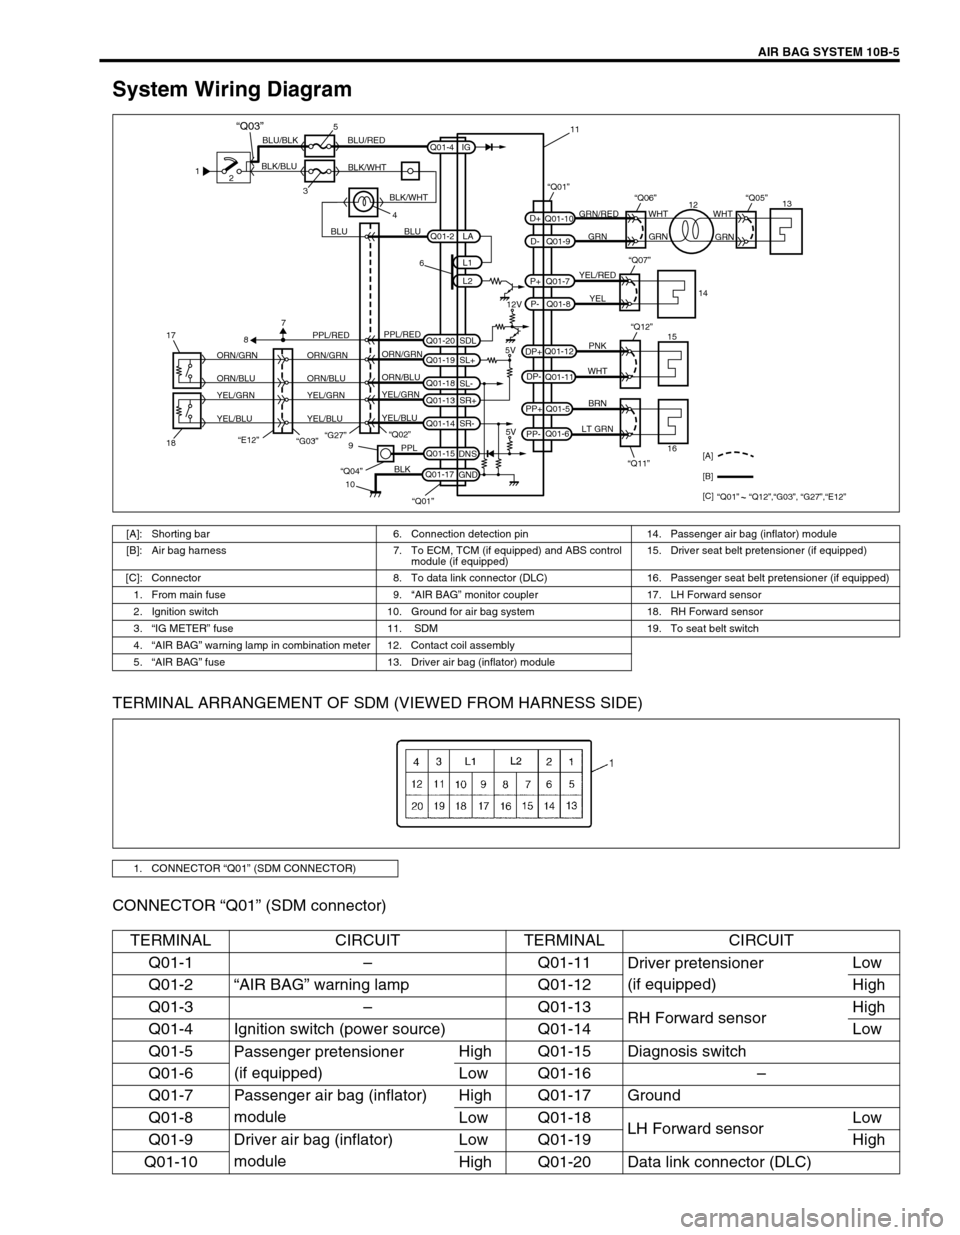 SUZUKI GRAND VITARA 2001 2.G Owners Manual AIR BAG SYSTEM 10B-5
System Wiring Diagram
TERMINAL ARRANGEMENT OF SDM (VIEWED FROM HARNESS SIDE)
CONNECTOR “Q01” (SDM connector)
1
2
35
4 BLK/BLUBLU/BLK BLU/RED
BLK/WHT
BLU BLUGRN/RED
GRN GRNWHT 